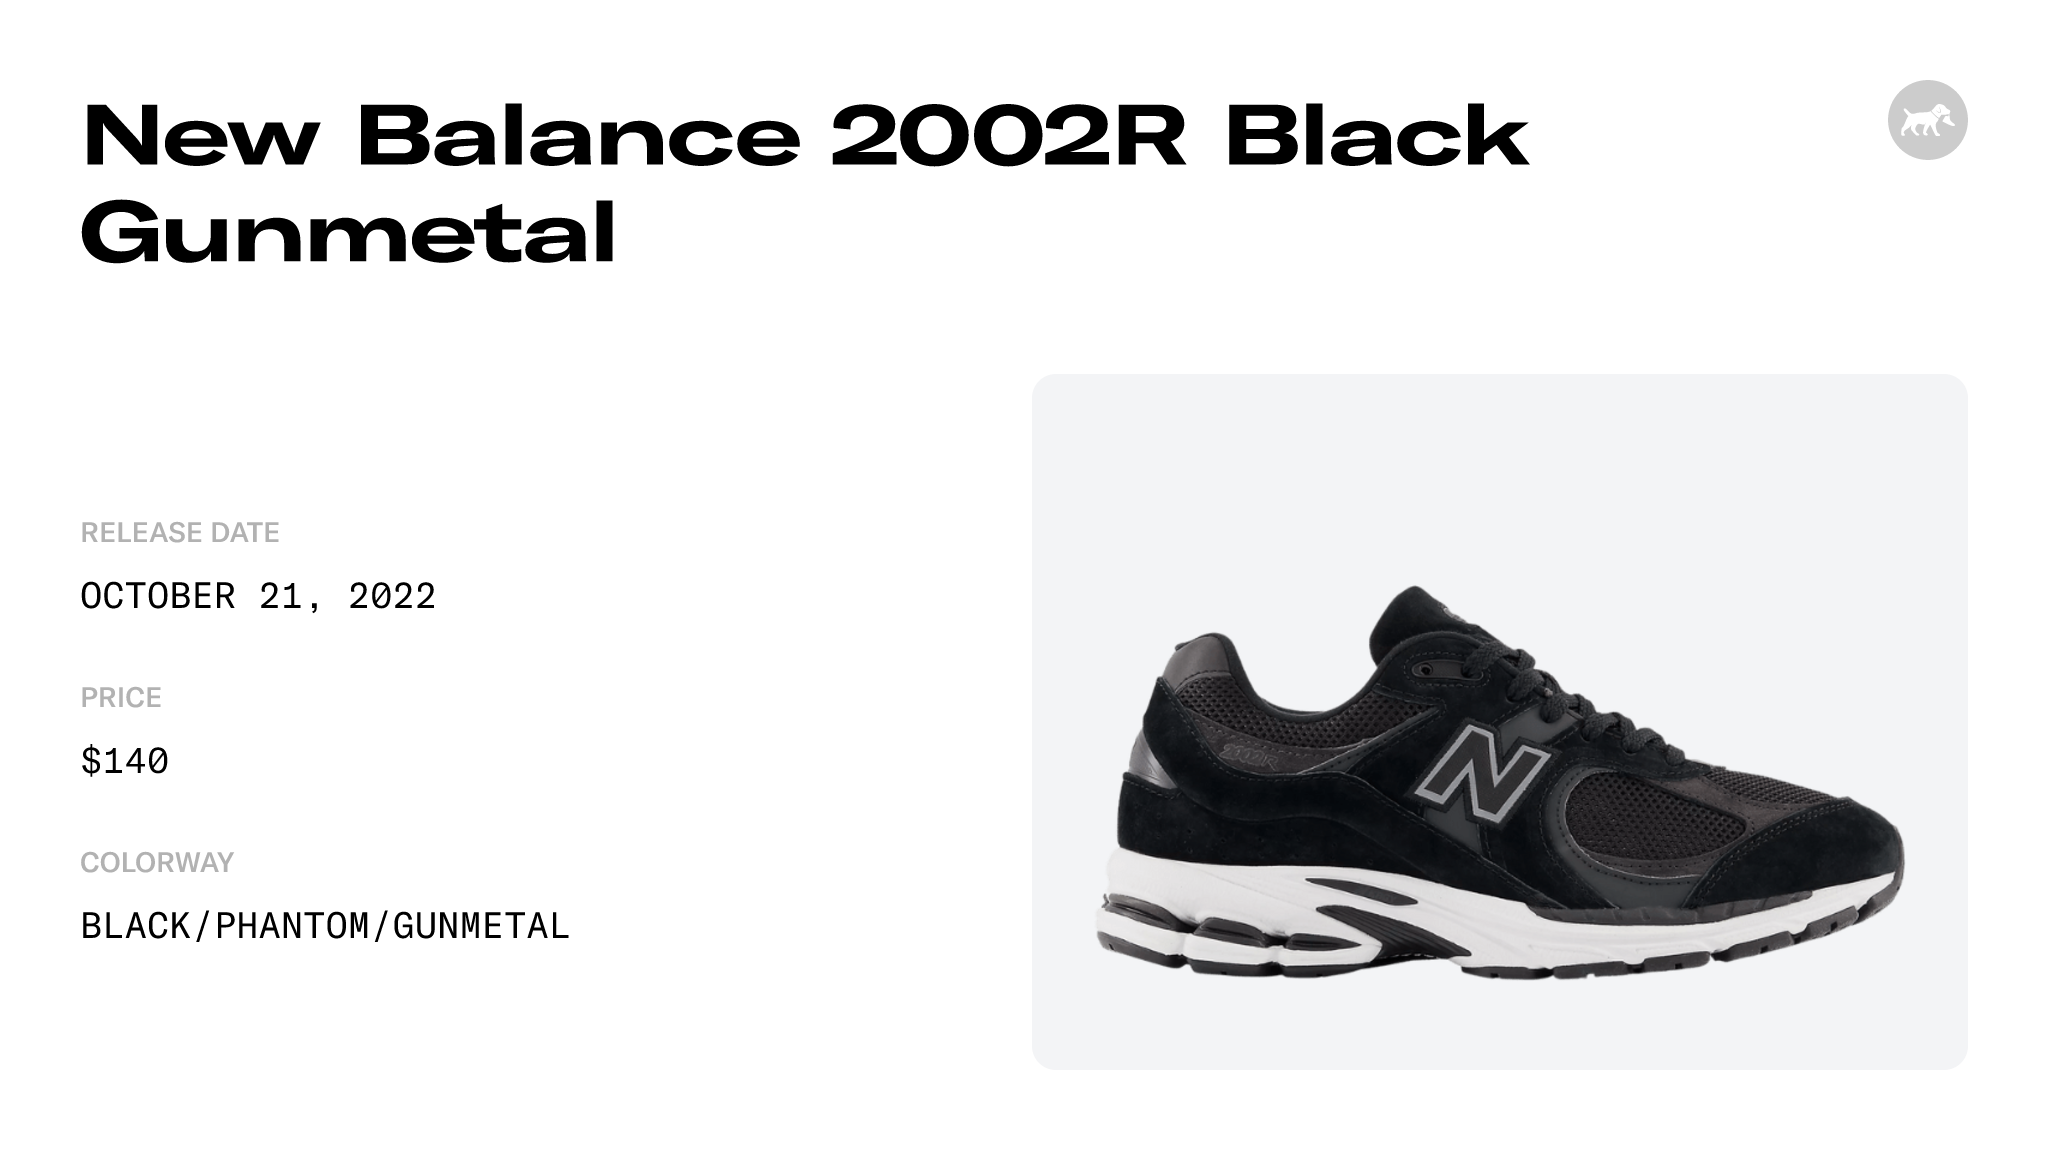 New Balance 2002R Black Gunmetal - M2002RBK Raffles and Release Date